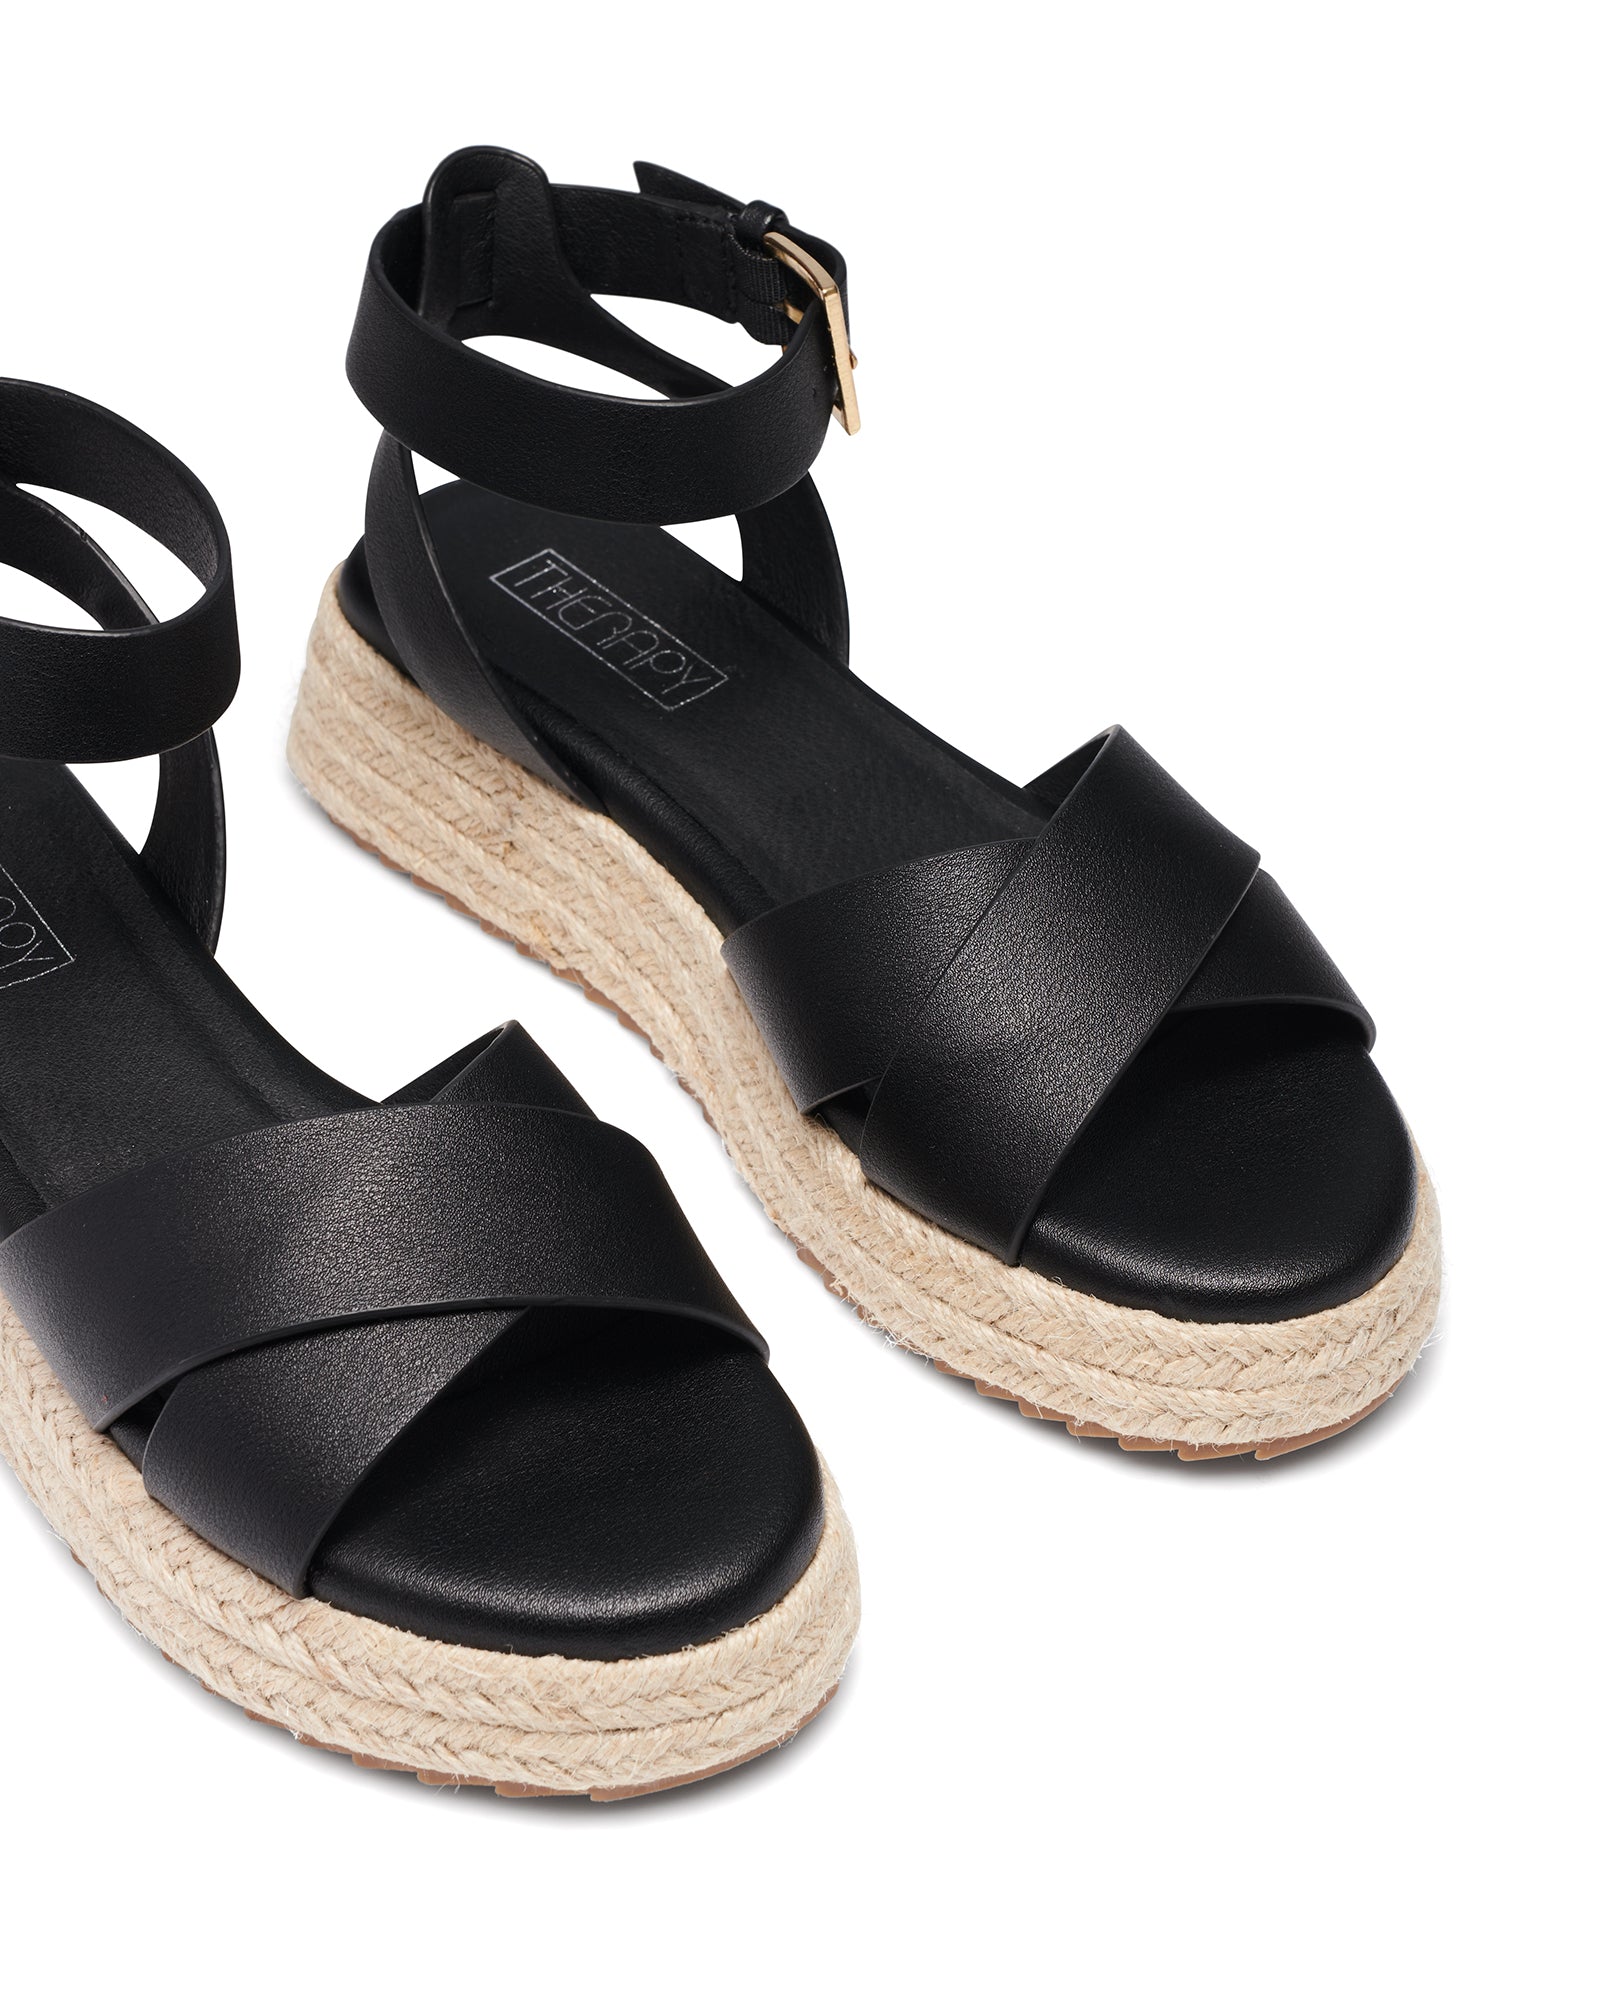 Therapy Shoes Palmer Black | Women's Sandals | Platform | Espadrille